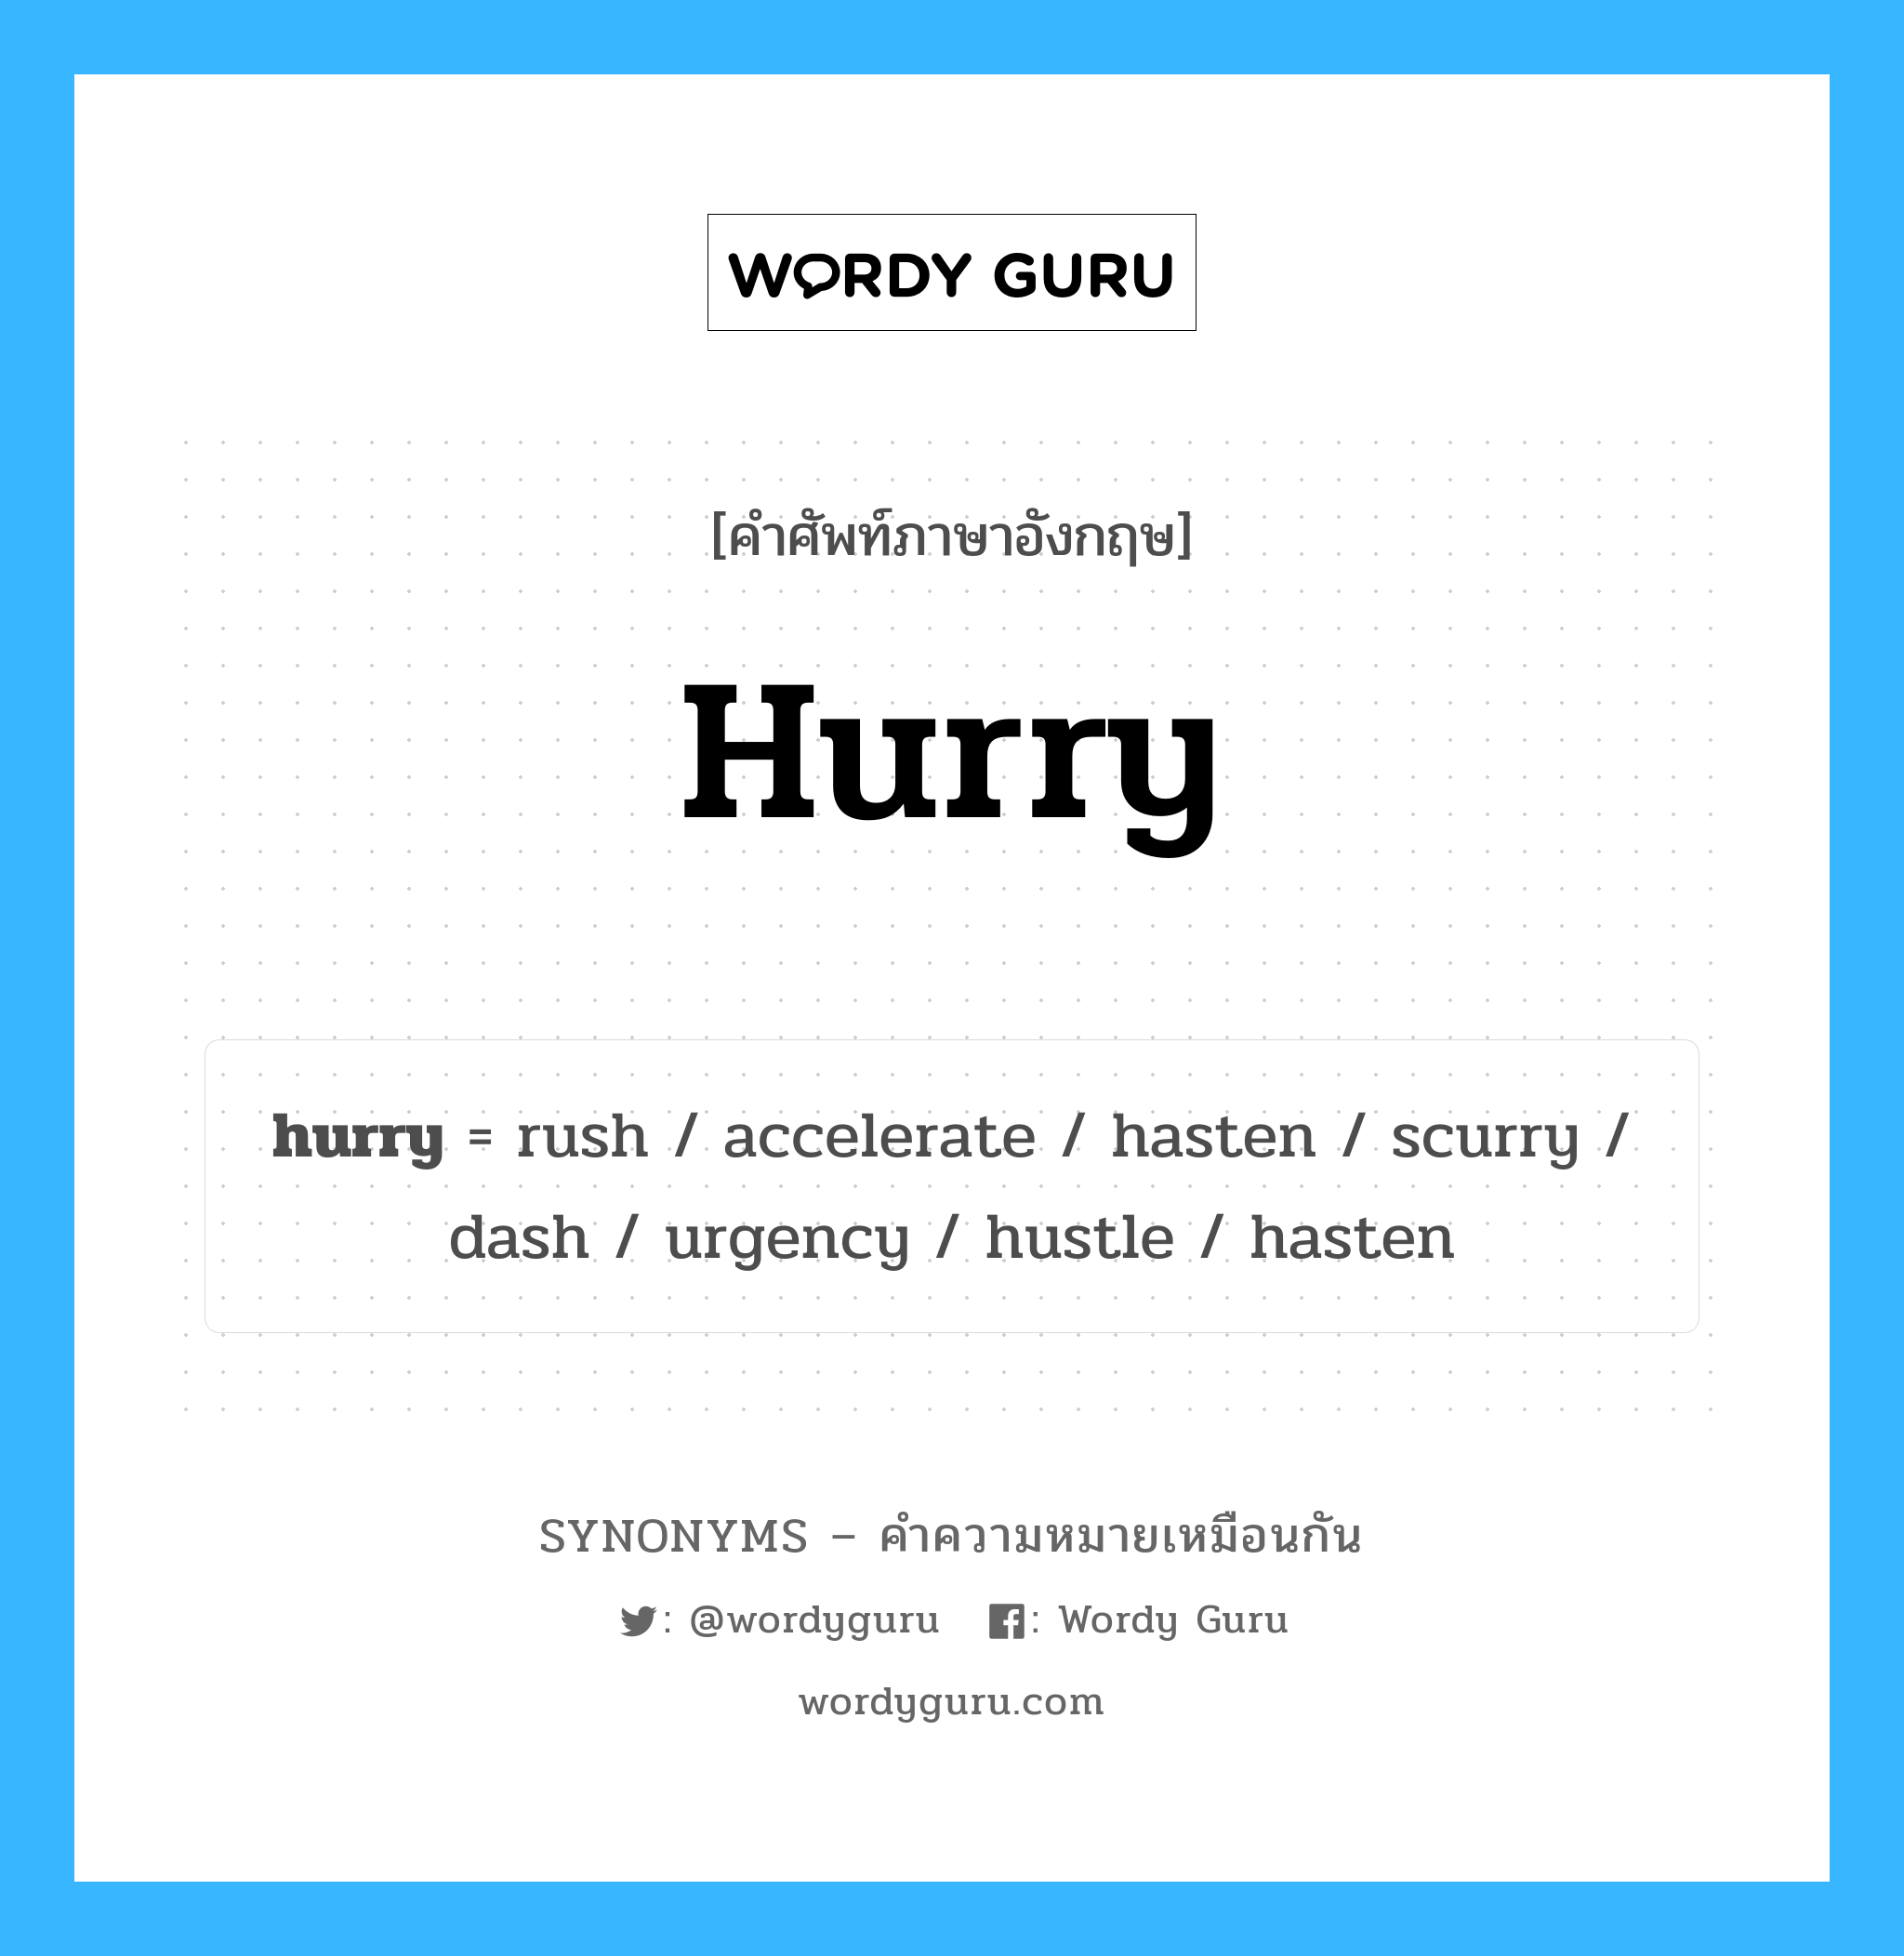 hurry เป็นหนึ่งใน hustle และมีคำอื่น ๆ อีกดังนี้, คำศัพท์ภาษาอังกฤษ hurry ความหมายคล้ายกันกับ hustle แปลว่า ความเร่งรีบ หมวด hustle